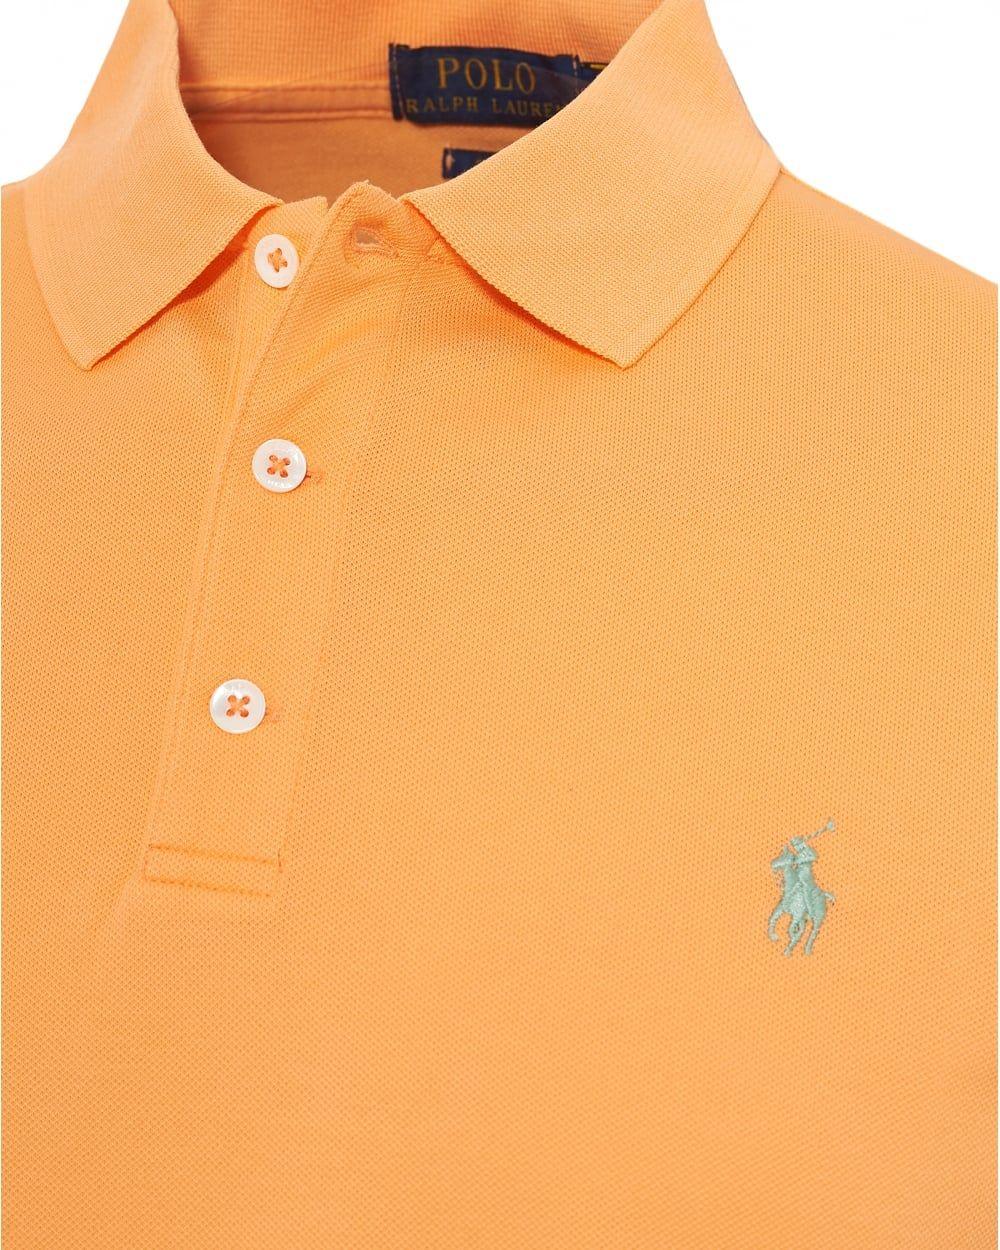 Orange Polo Logo - Ralph Lauren Mens Mesh Polo Shirt, Embroidered Logo Orange Polo